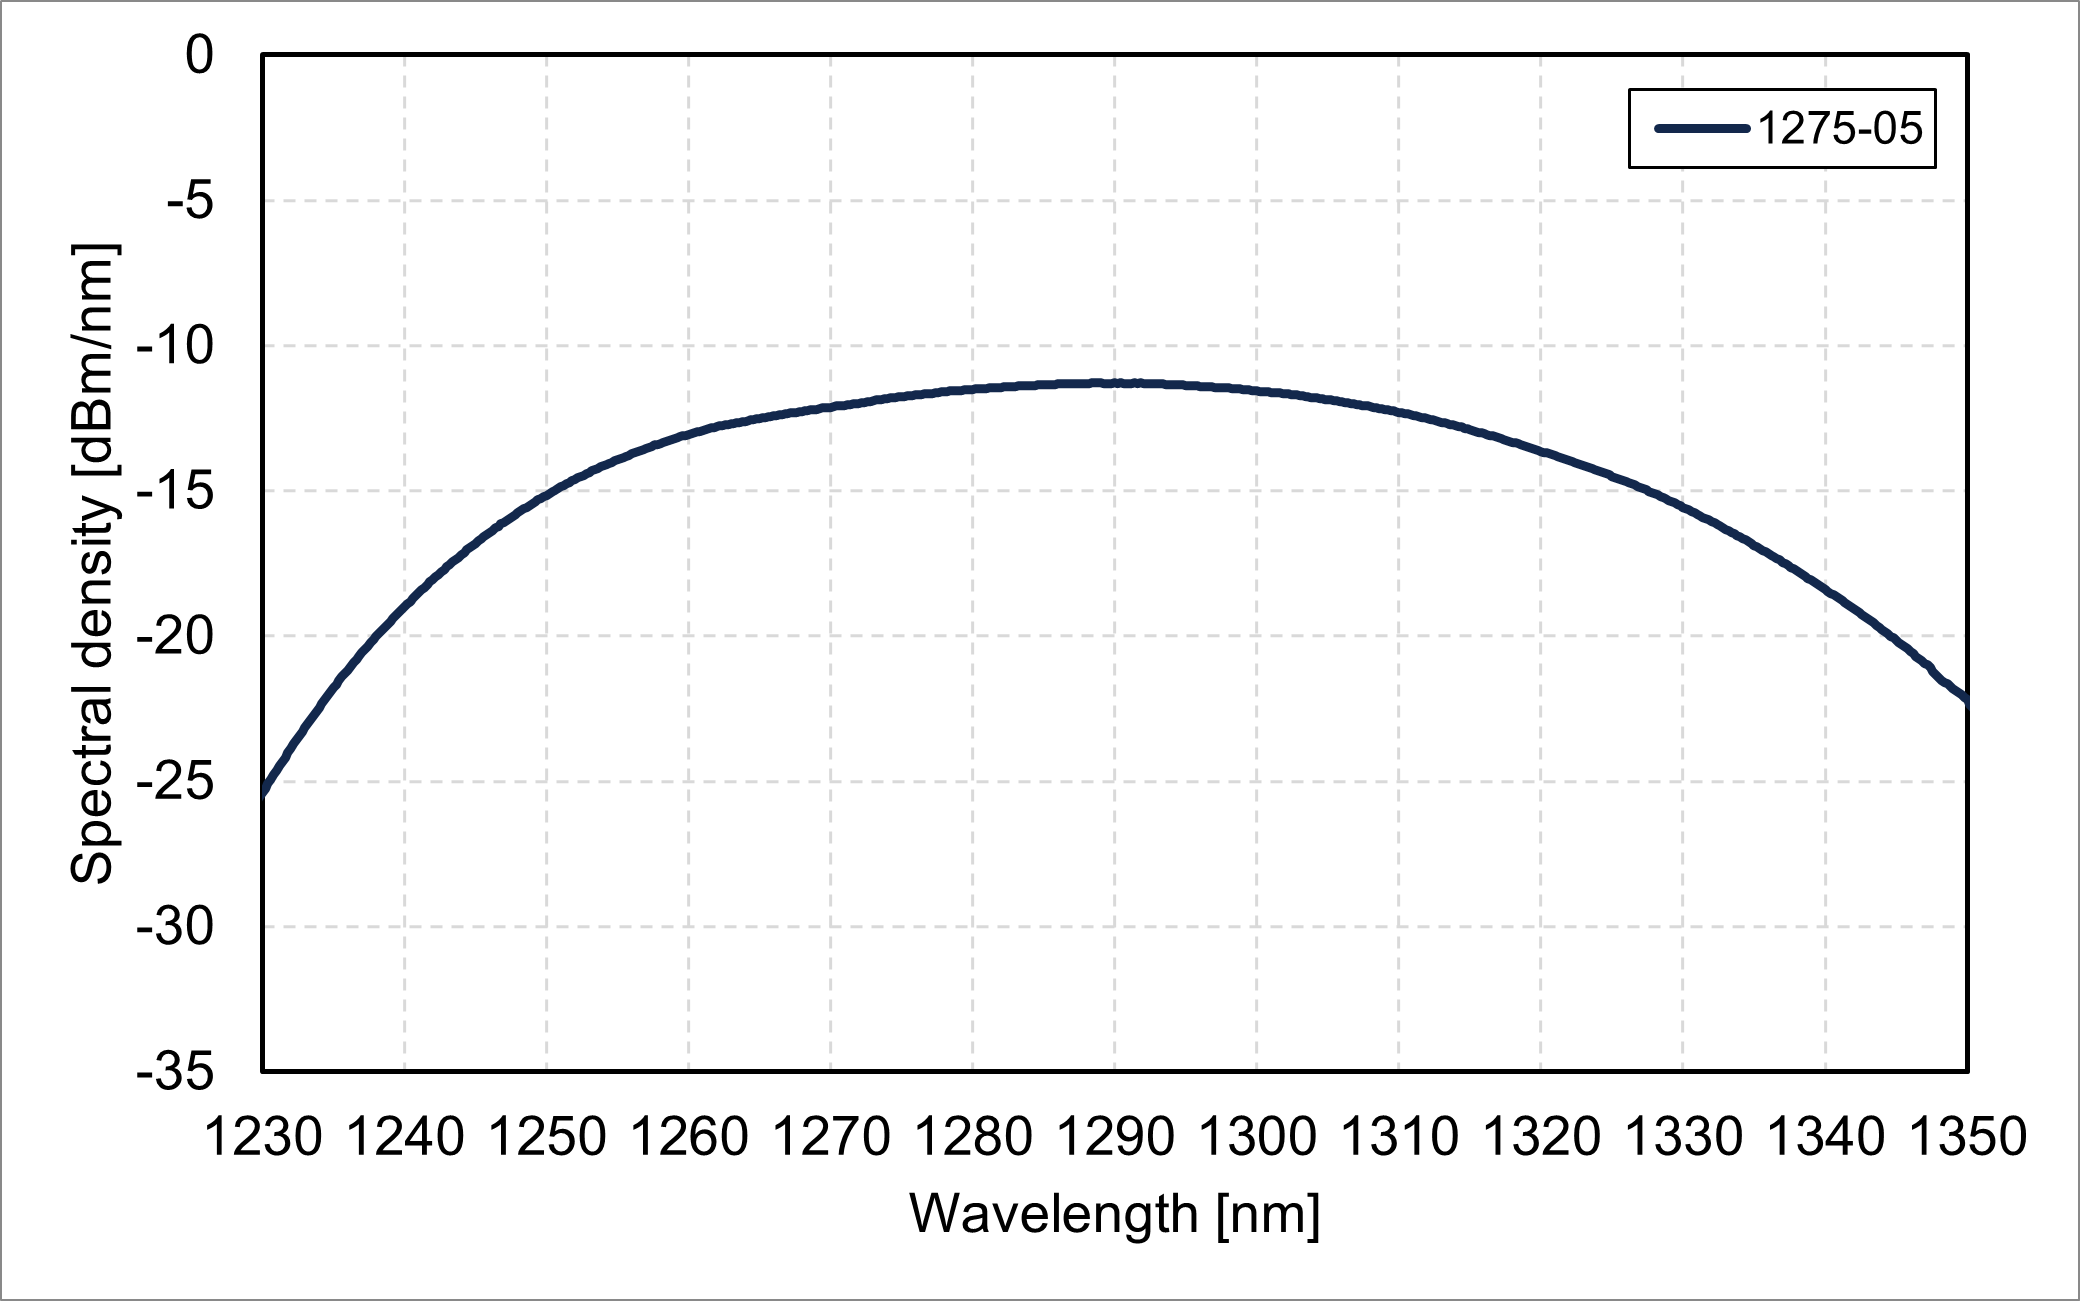 Spectral density vs. wavelength (1275-05)